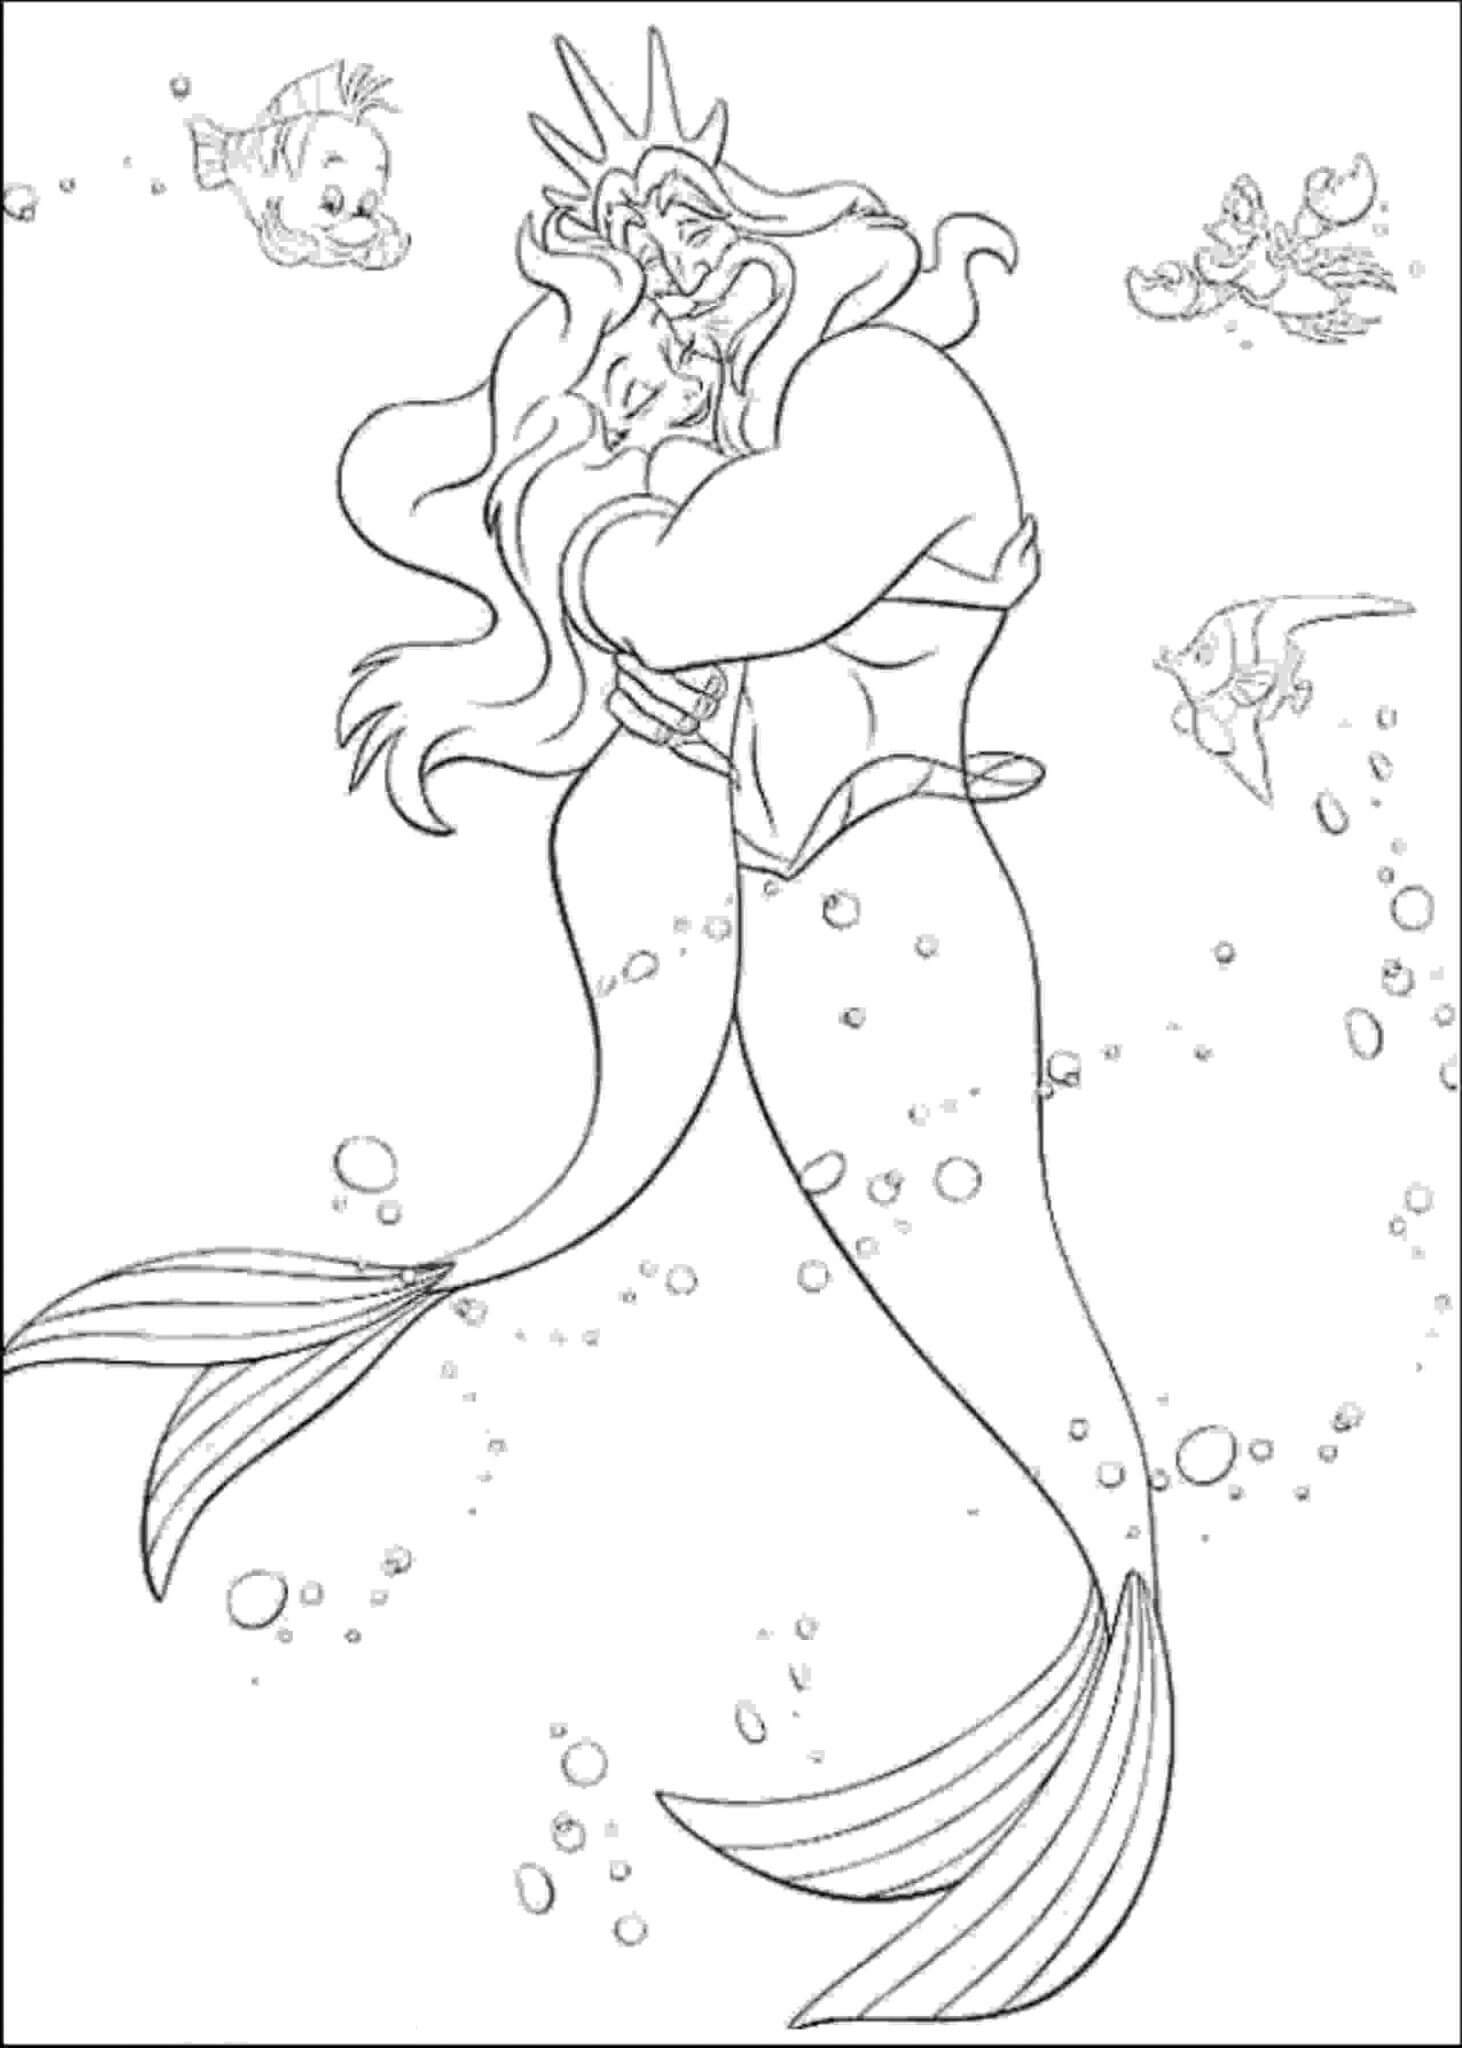 Aquaman umarmt Meerjungfrau Ariel